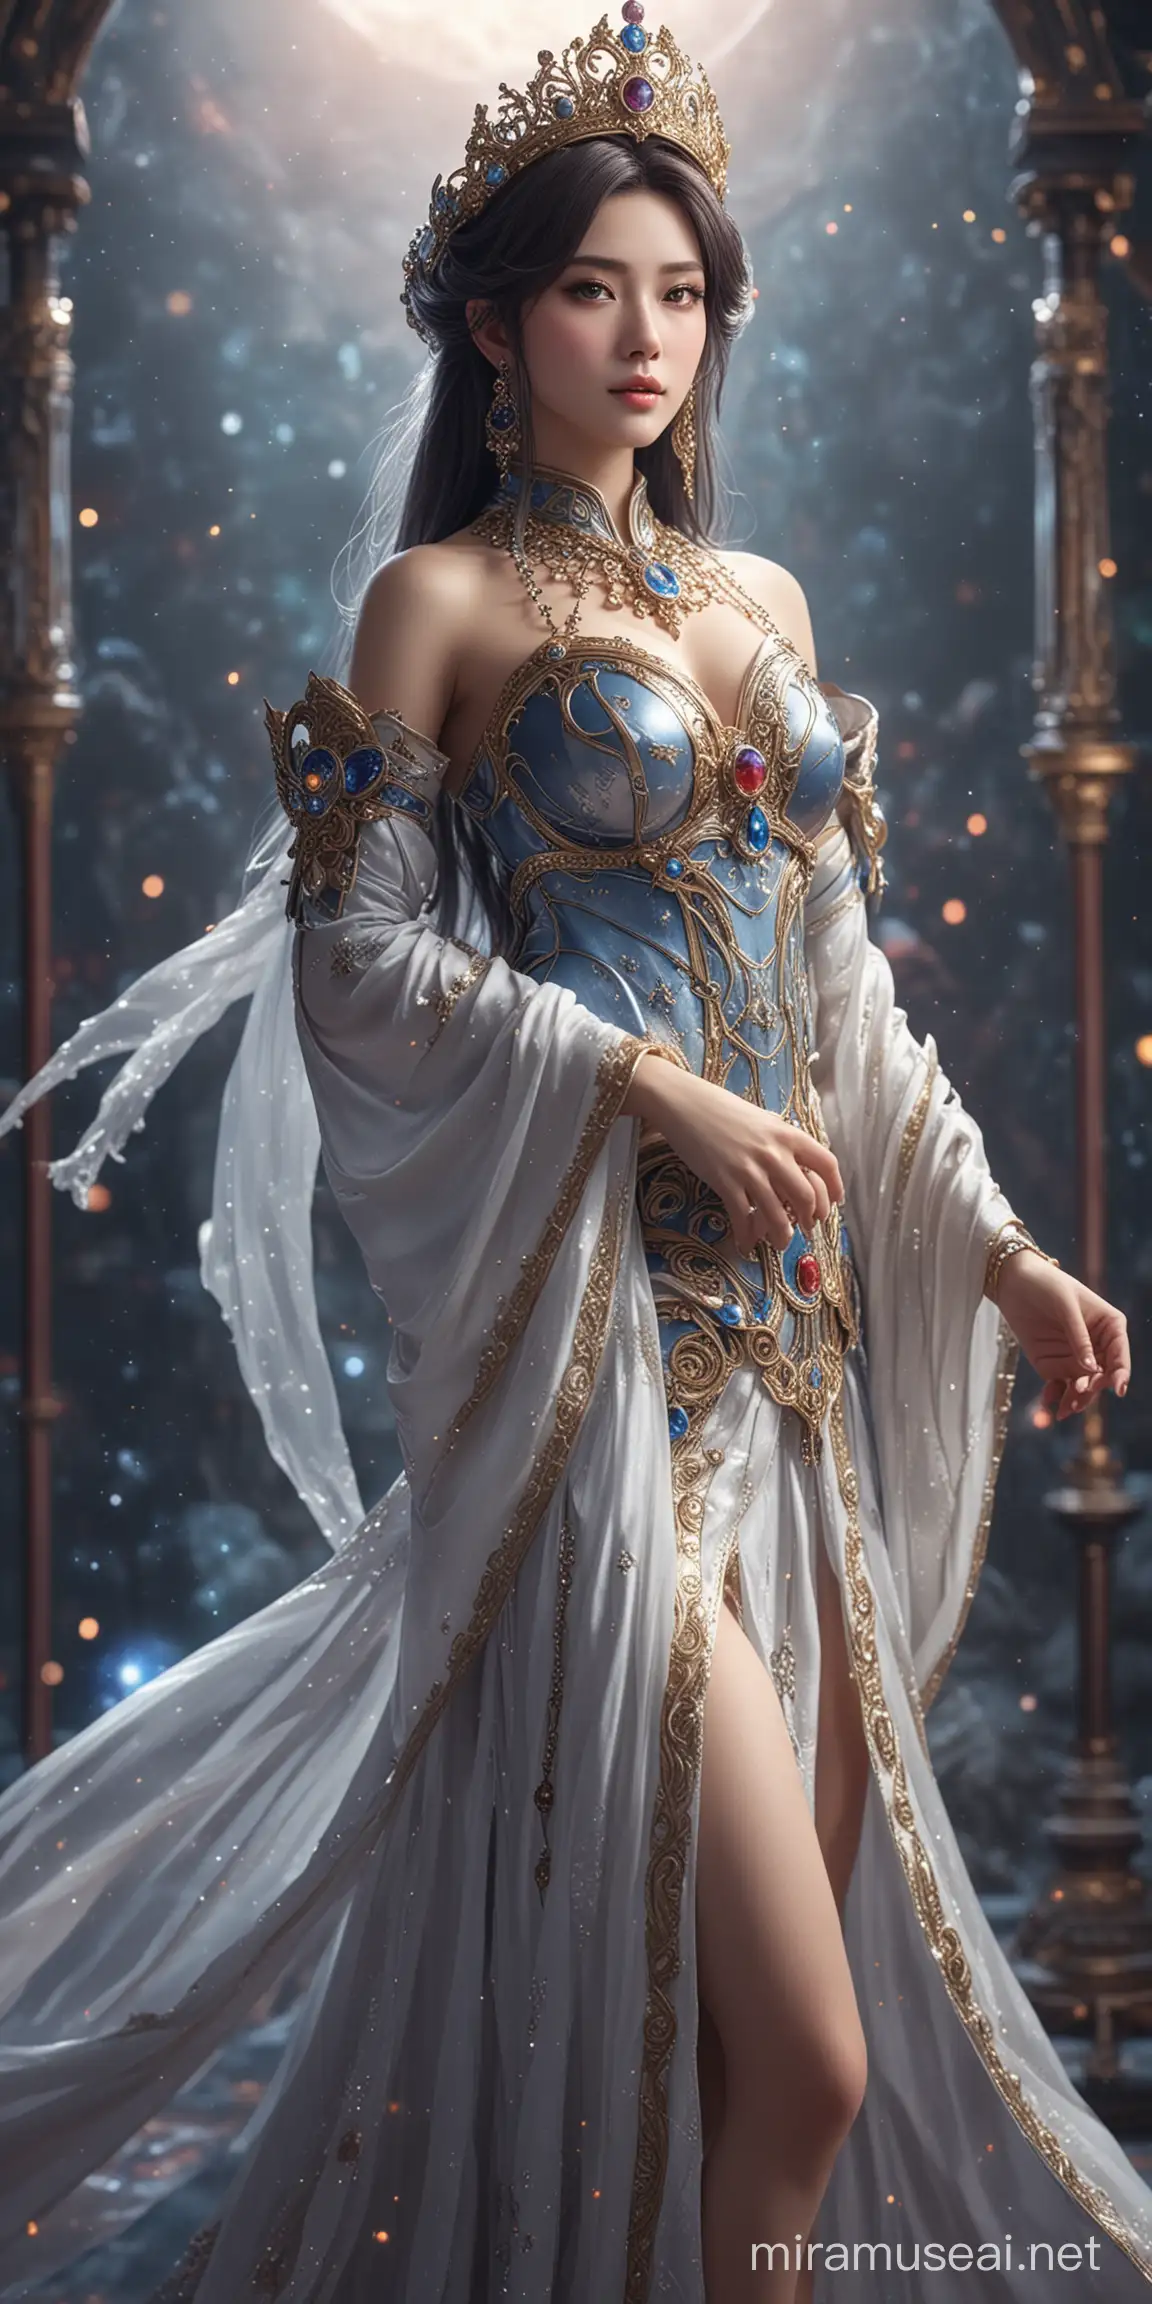 Elegant Empress in Cosmic Fantasy Studio Portrait